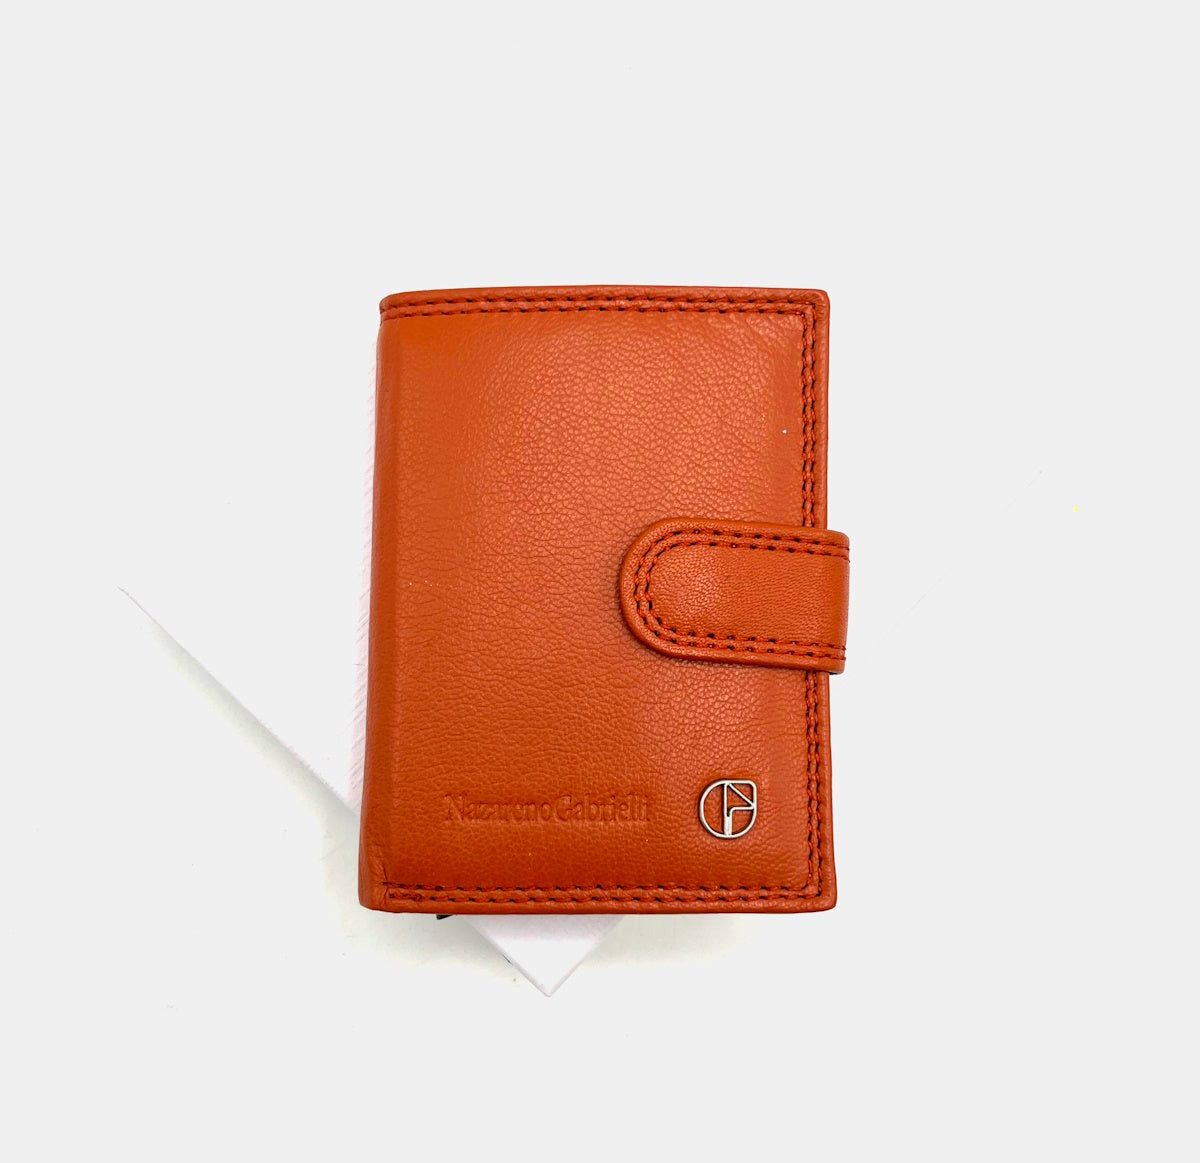 Genuine leather wallet, N.Gabrielli, art. PDK391-92